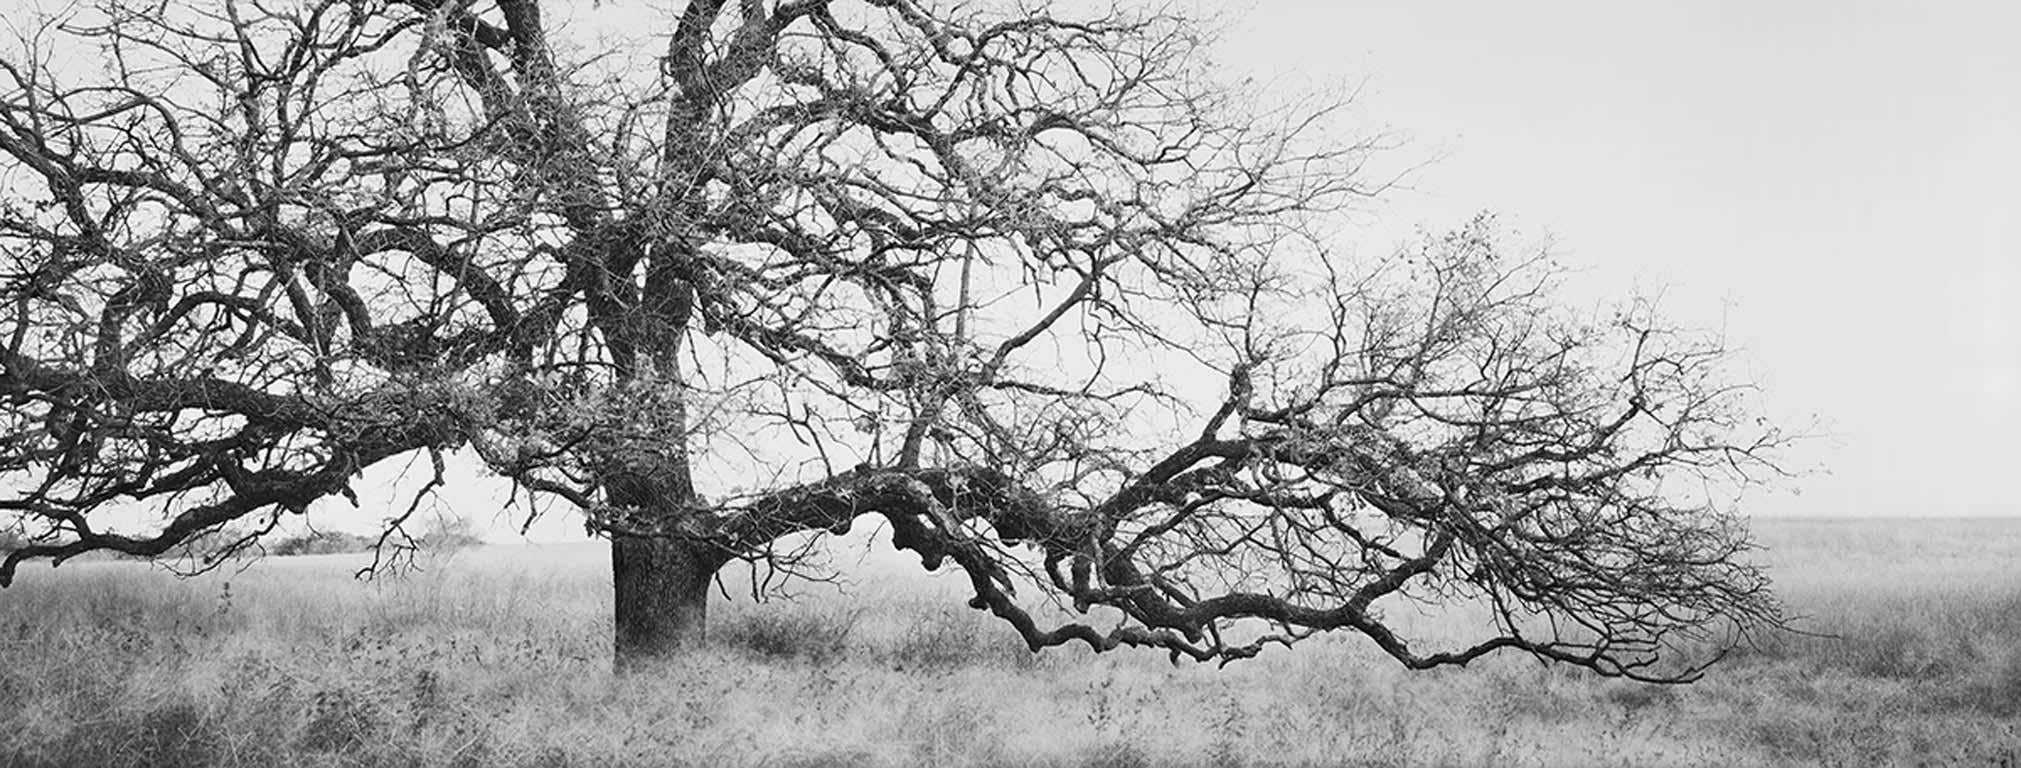 Black and White Photograph David H. Gibson - Jardinire  gazon et chne, ranch Boddy, Henrietta, Texas